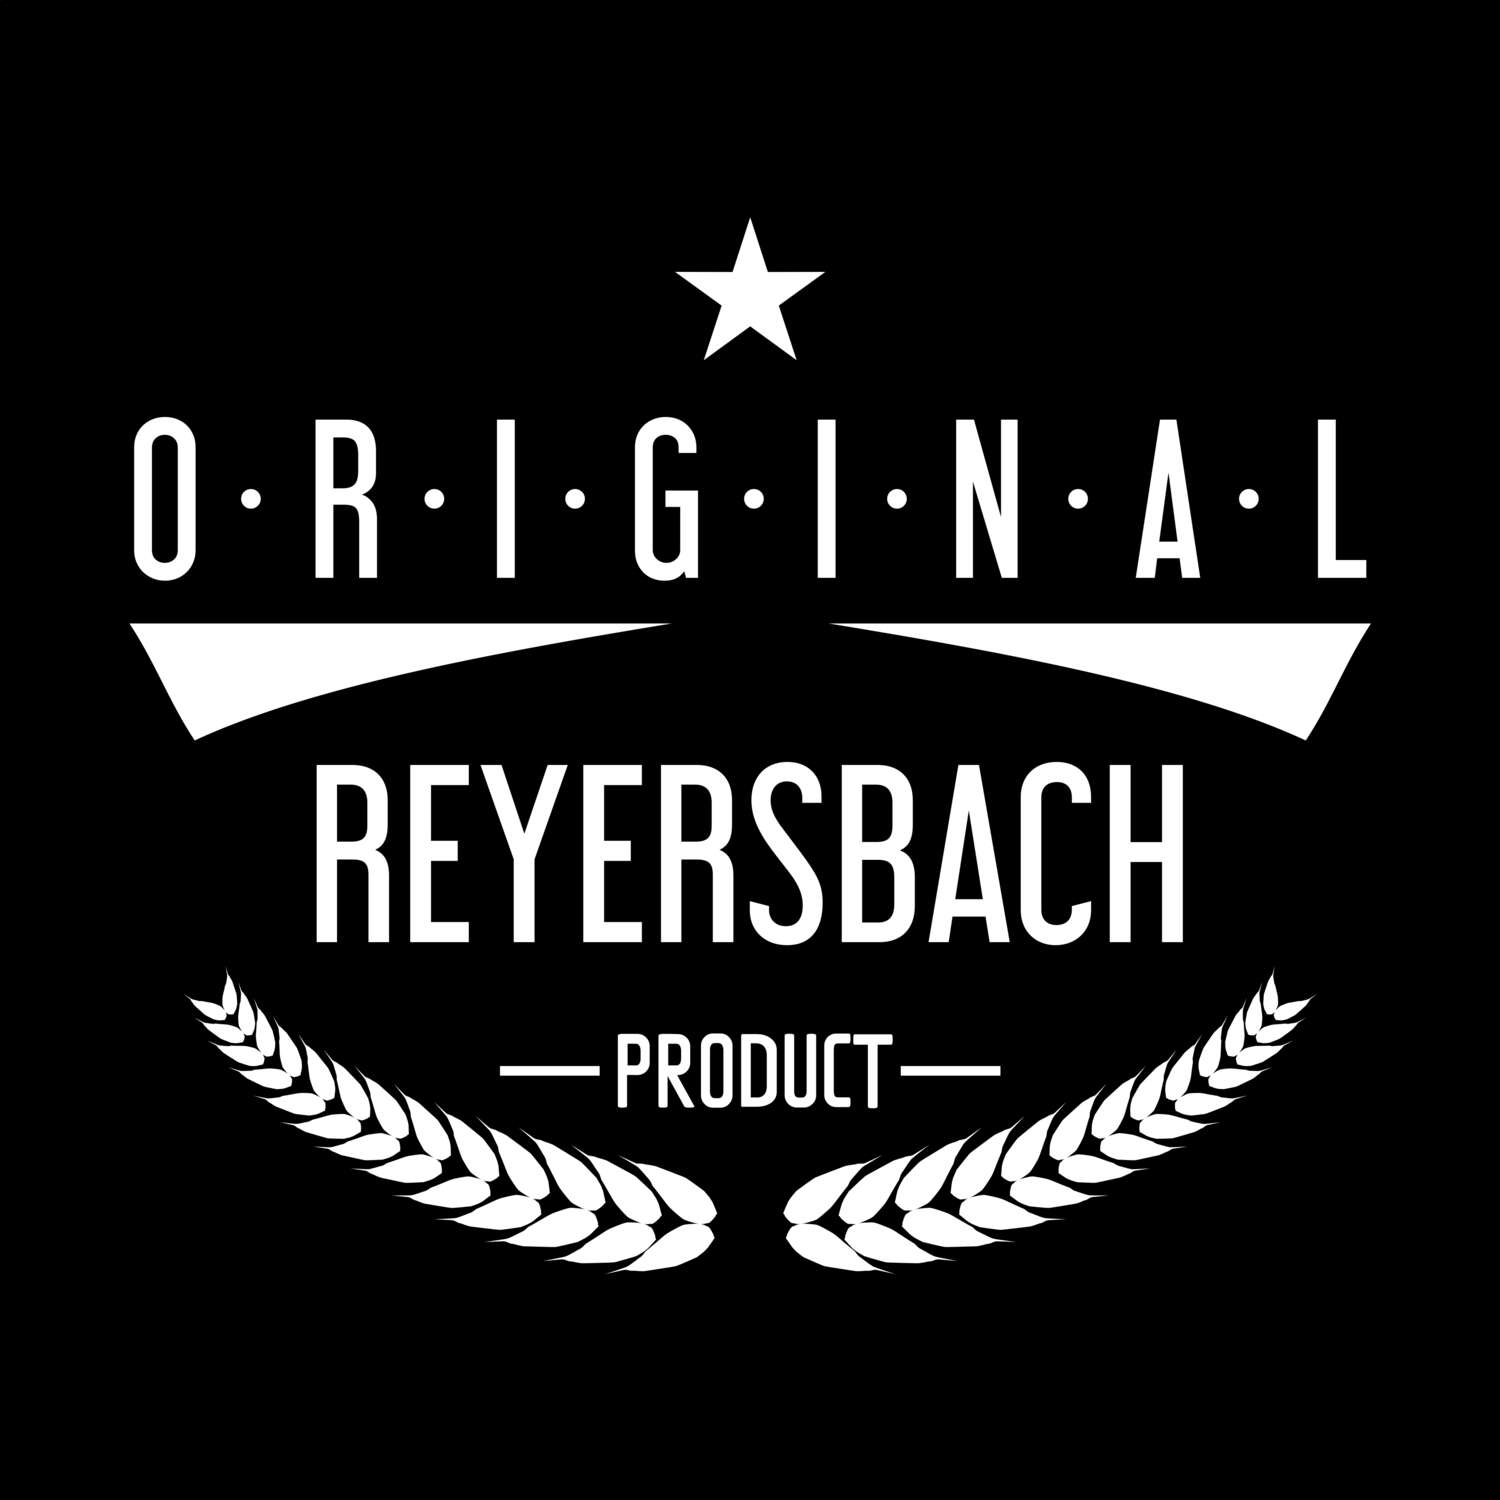 Reyersbach T-Shirt »Original Product«